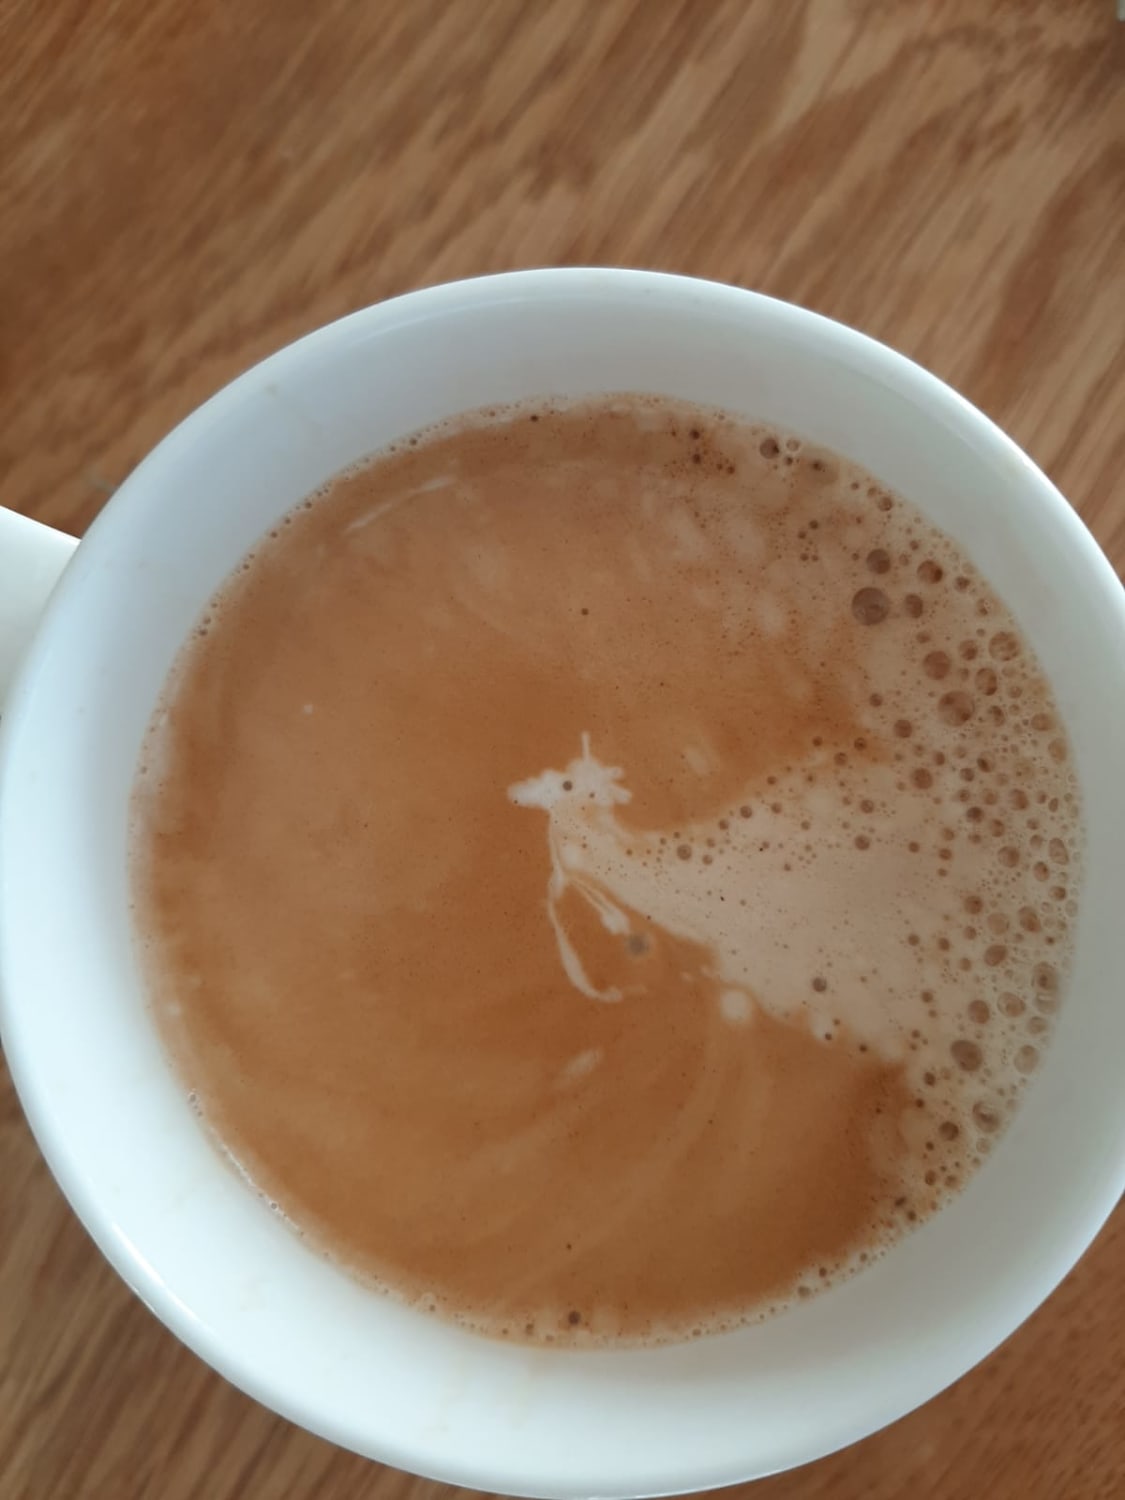 My morning coffee had a flying unicorn in it.